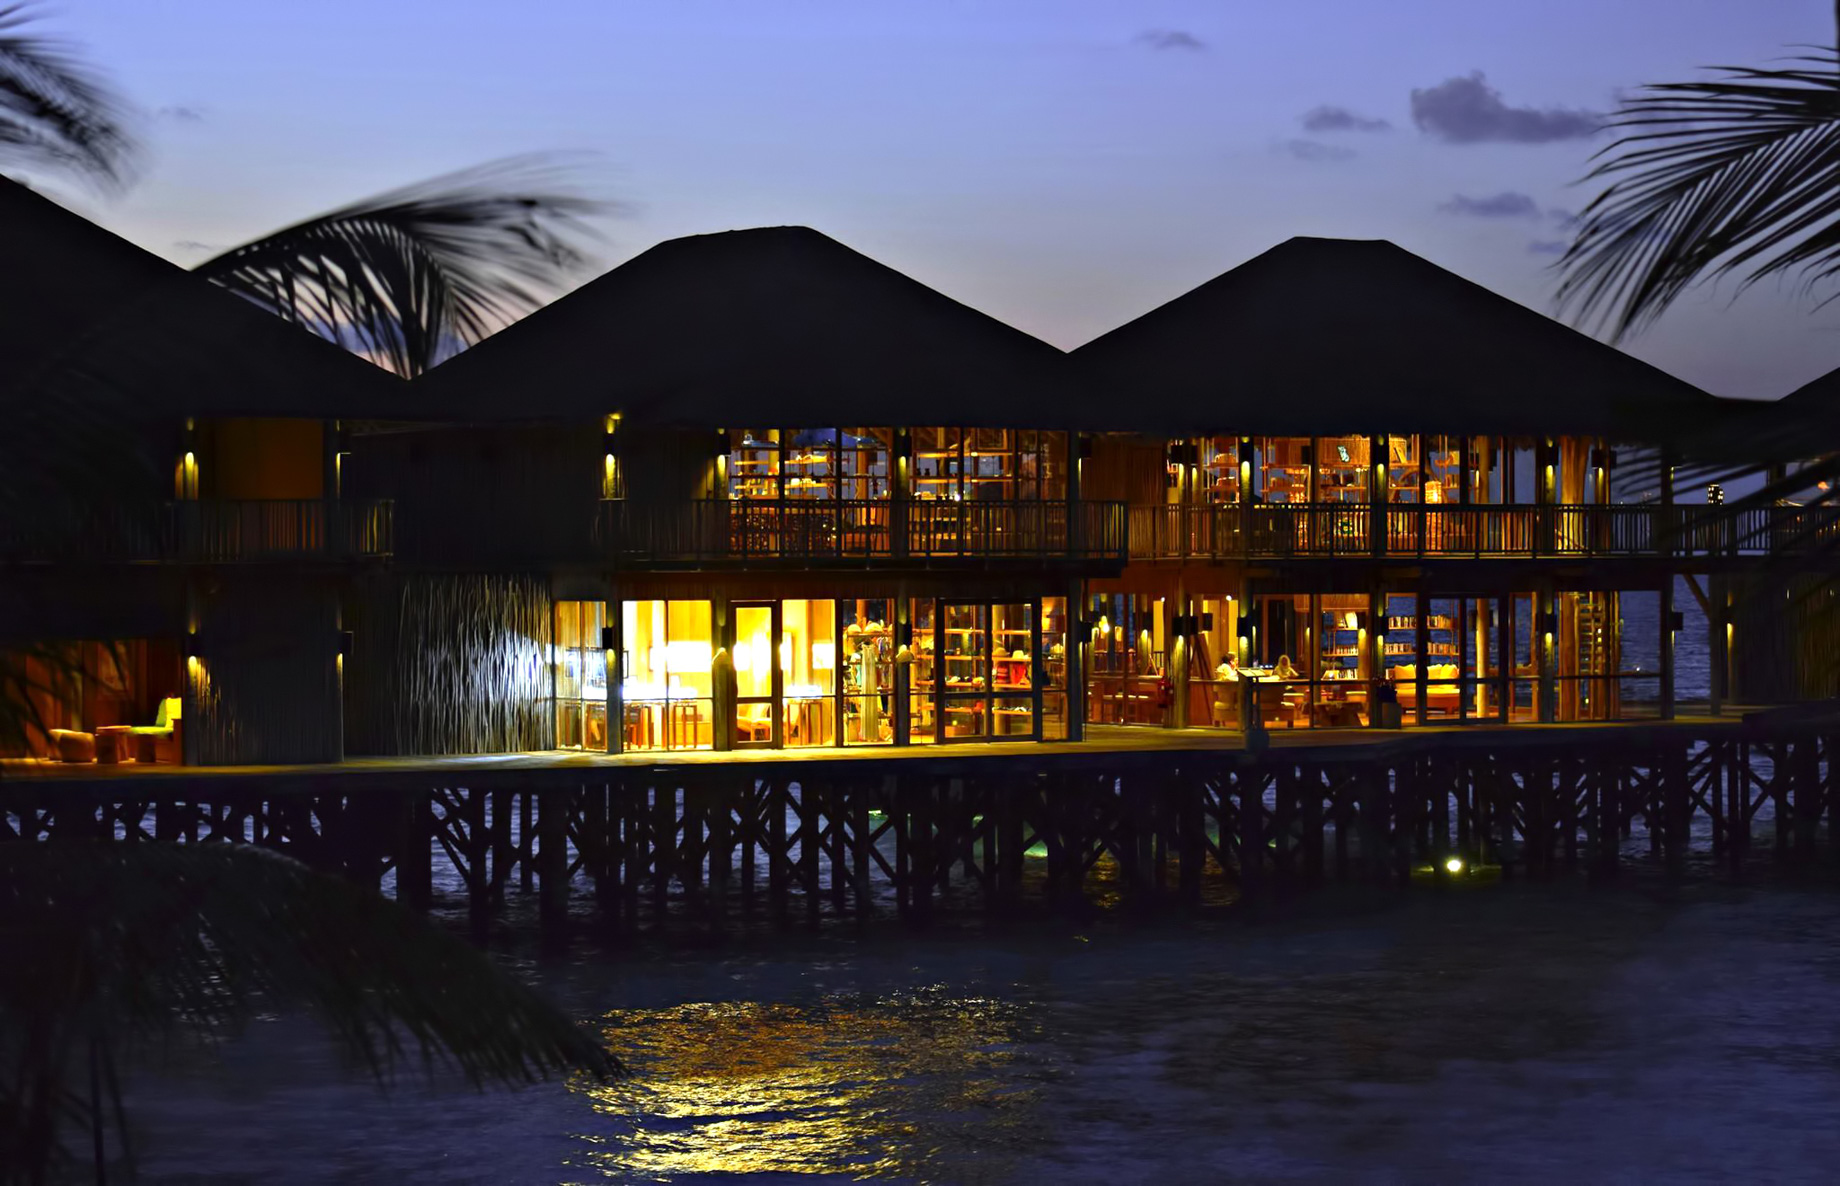 Six Senses Laamu Resort – Laamu Atoll, Maldives – Overwater Restaurant Sunset